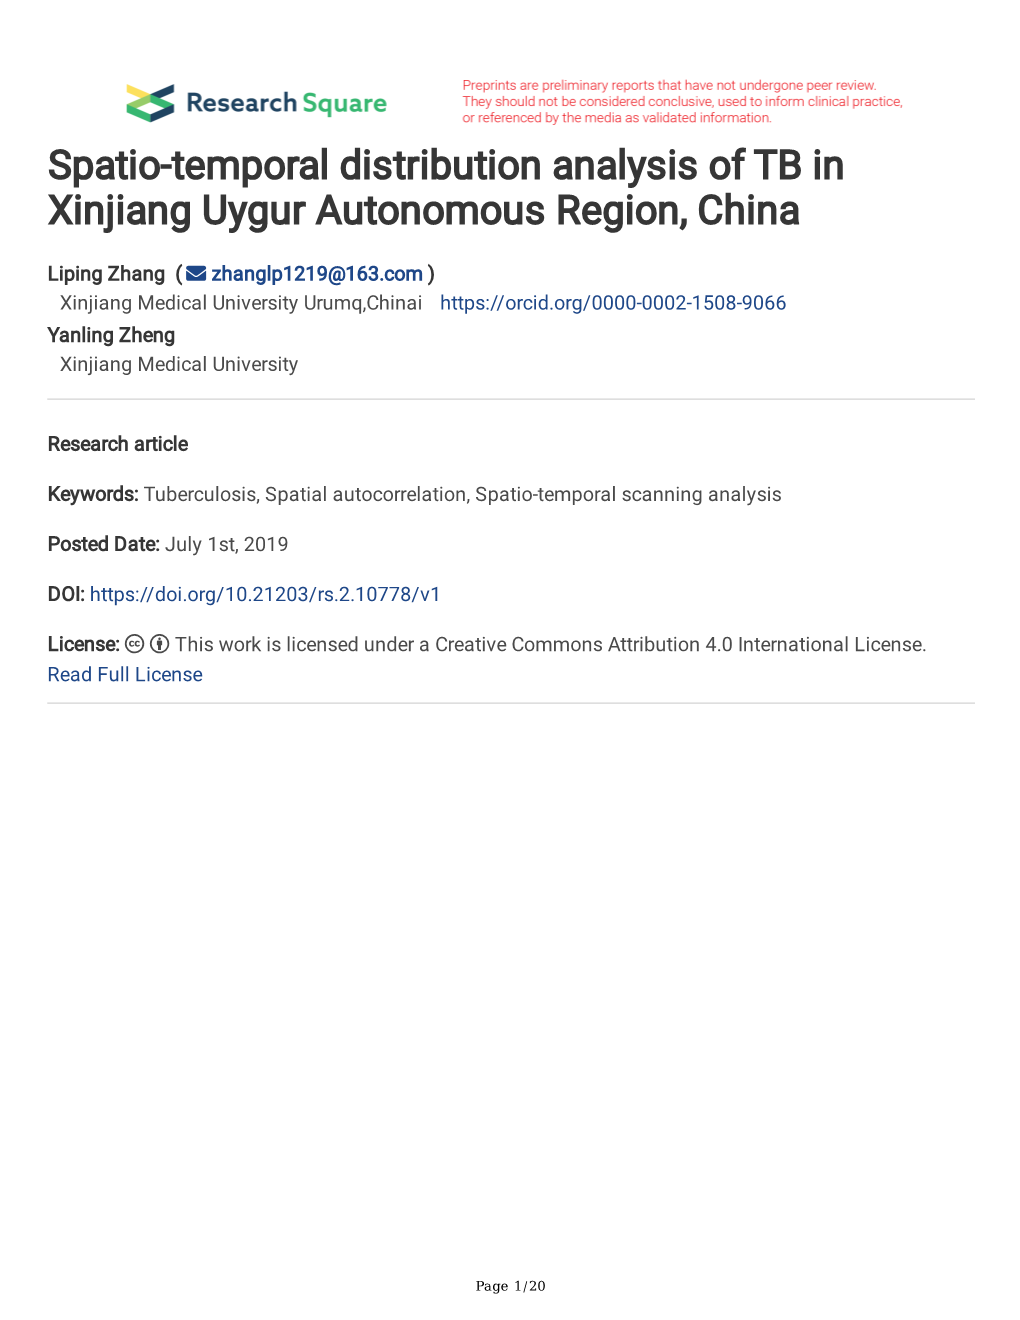 Spatio-Temporal Distribution Analysis of TB in Xinjiang Uygur Autonomous Region, China